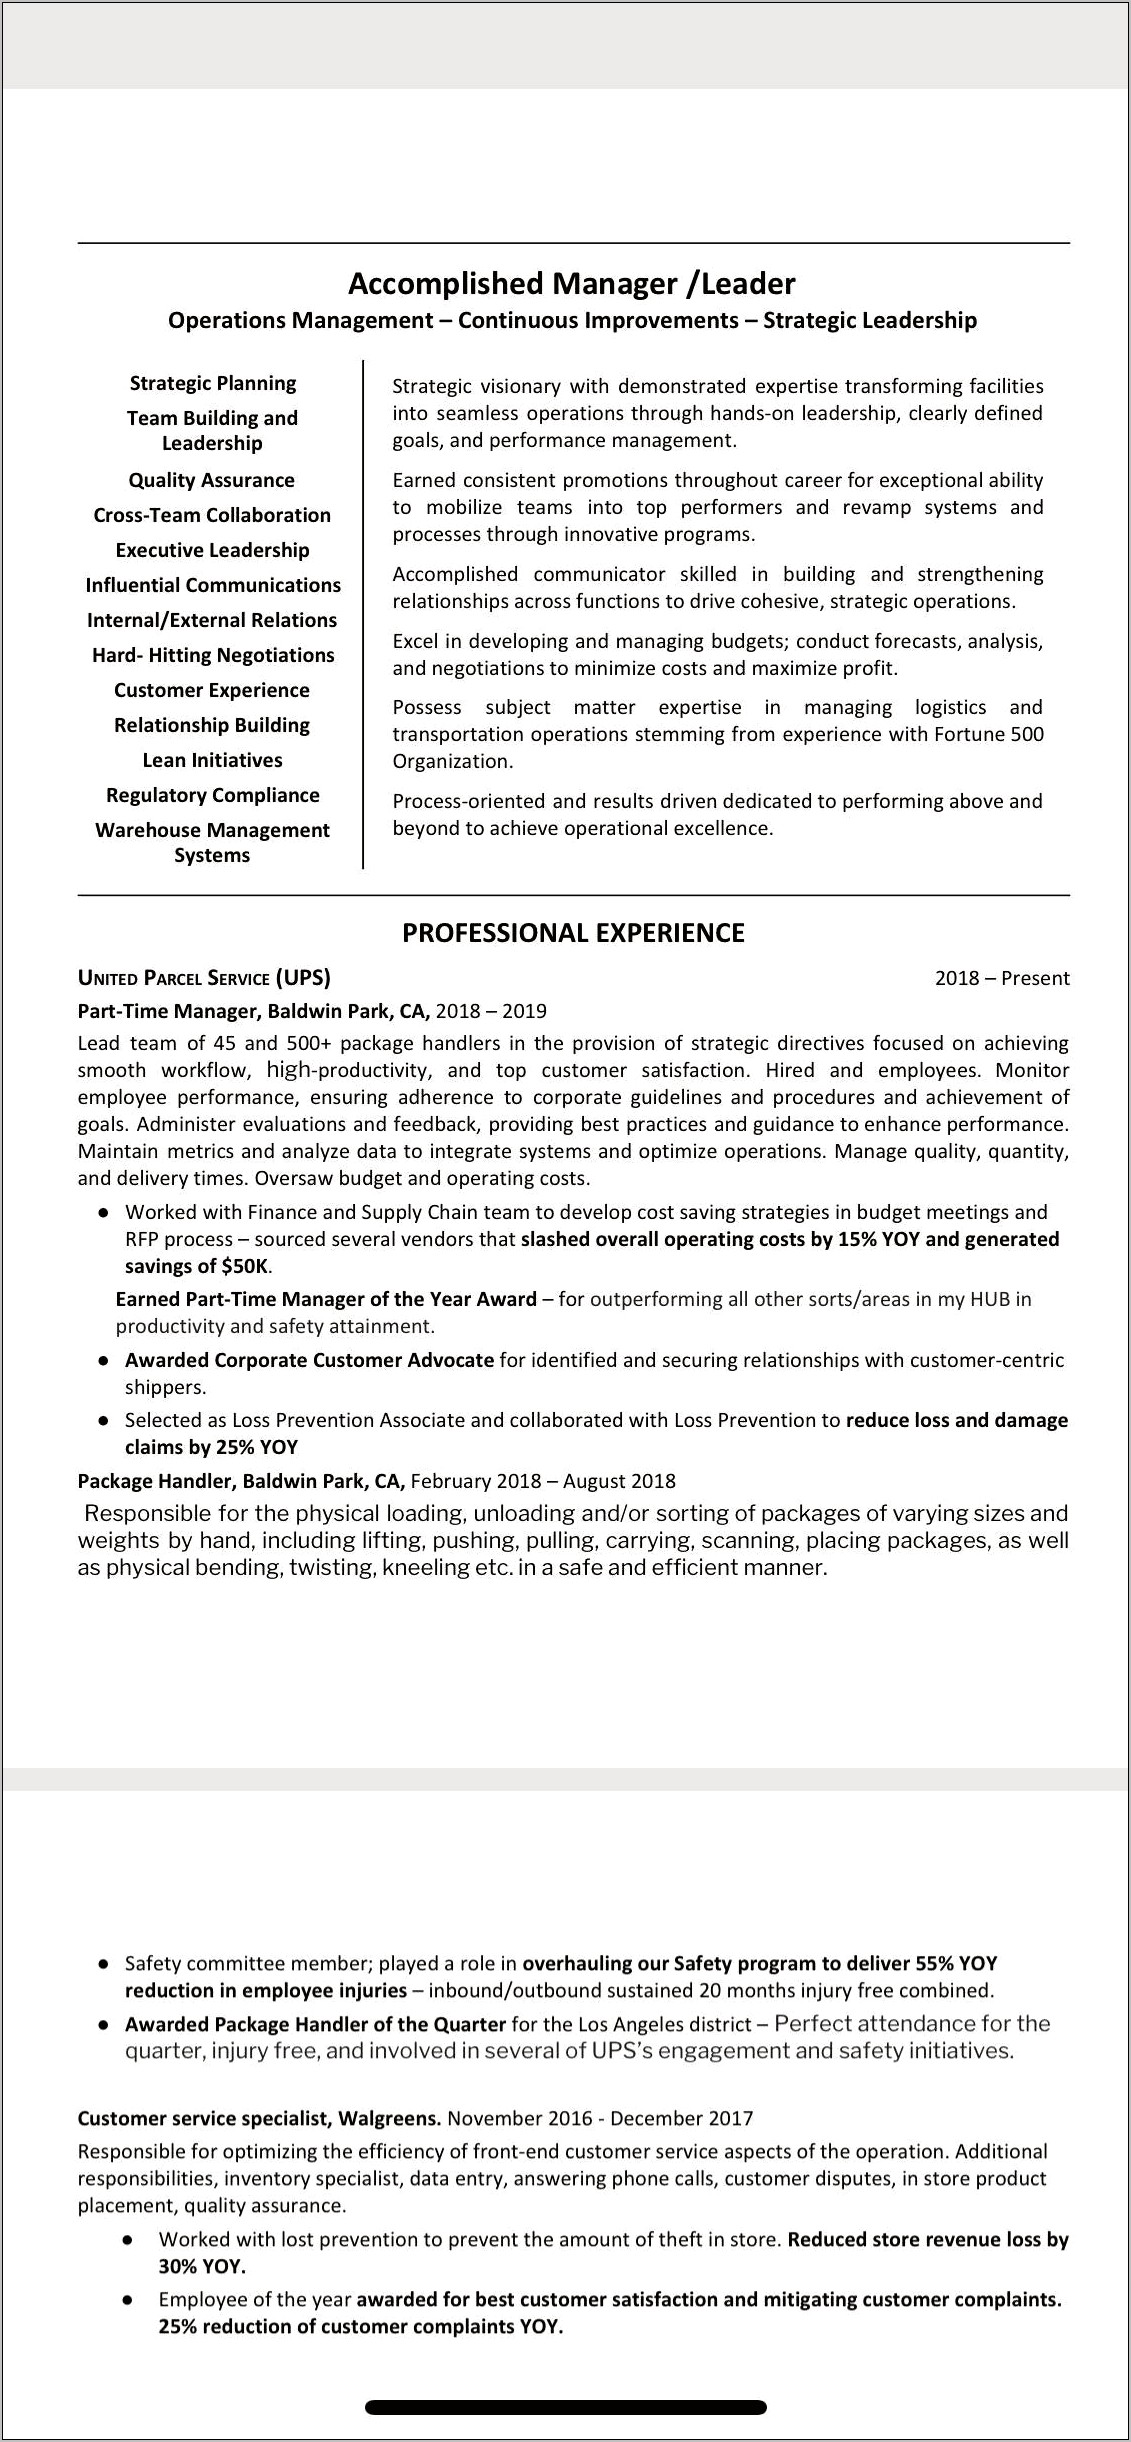 Fedex Office Job Description For Resume